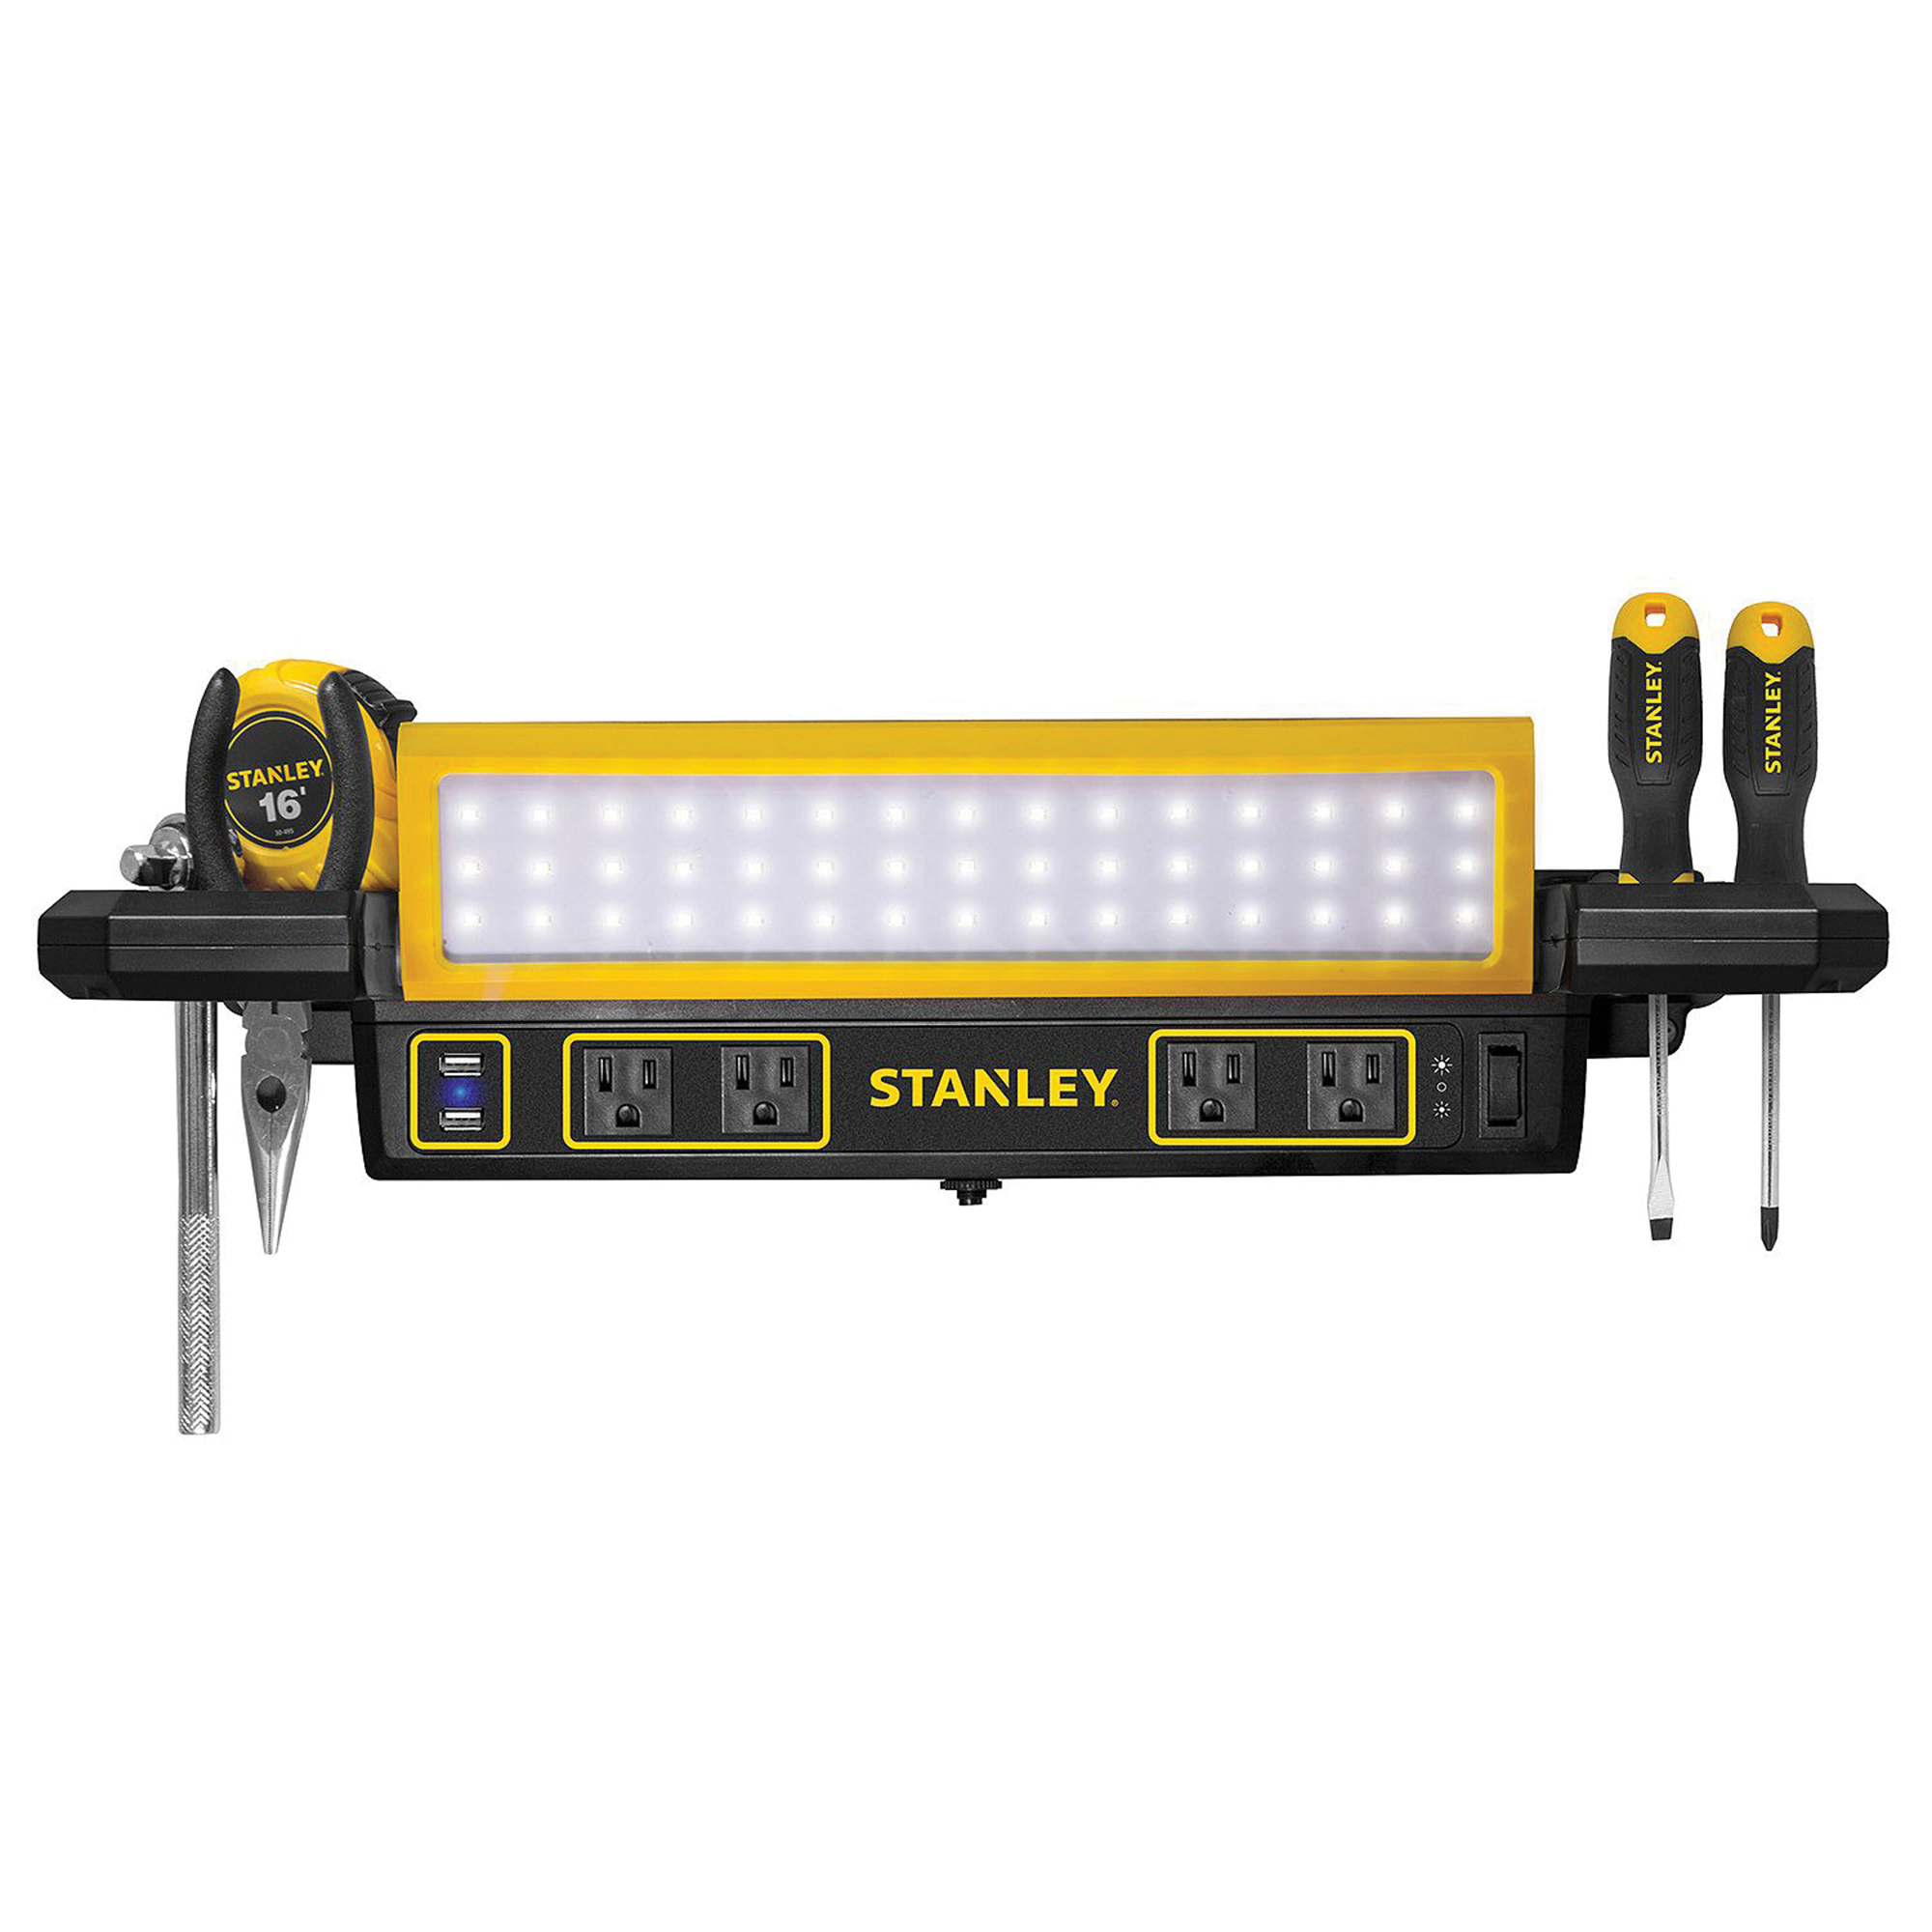 Stanley, Workbench Shop Light with Power Strip, Light Output 1000 lumen, Light Bulb Type LED, Model PSL1000S